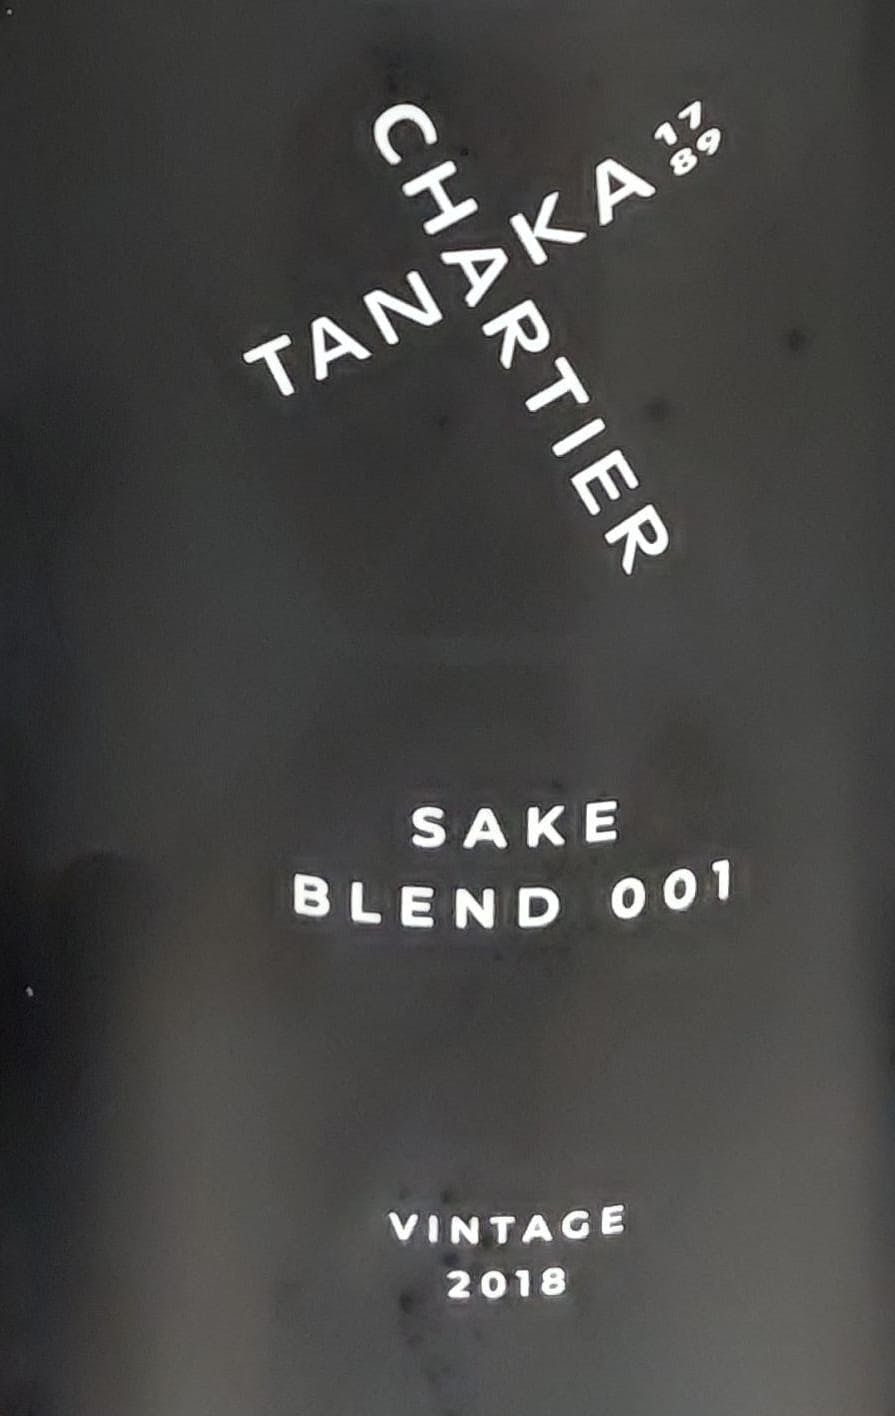 Tanaka 1789 X Chartier Blend 001 Vintage 2018 | Tanaka Shuzoten